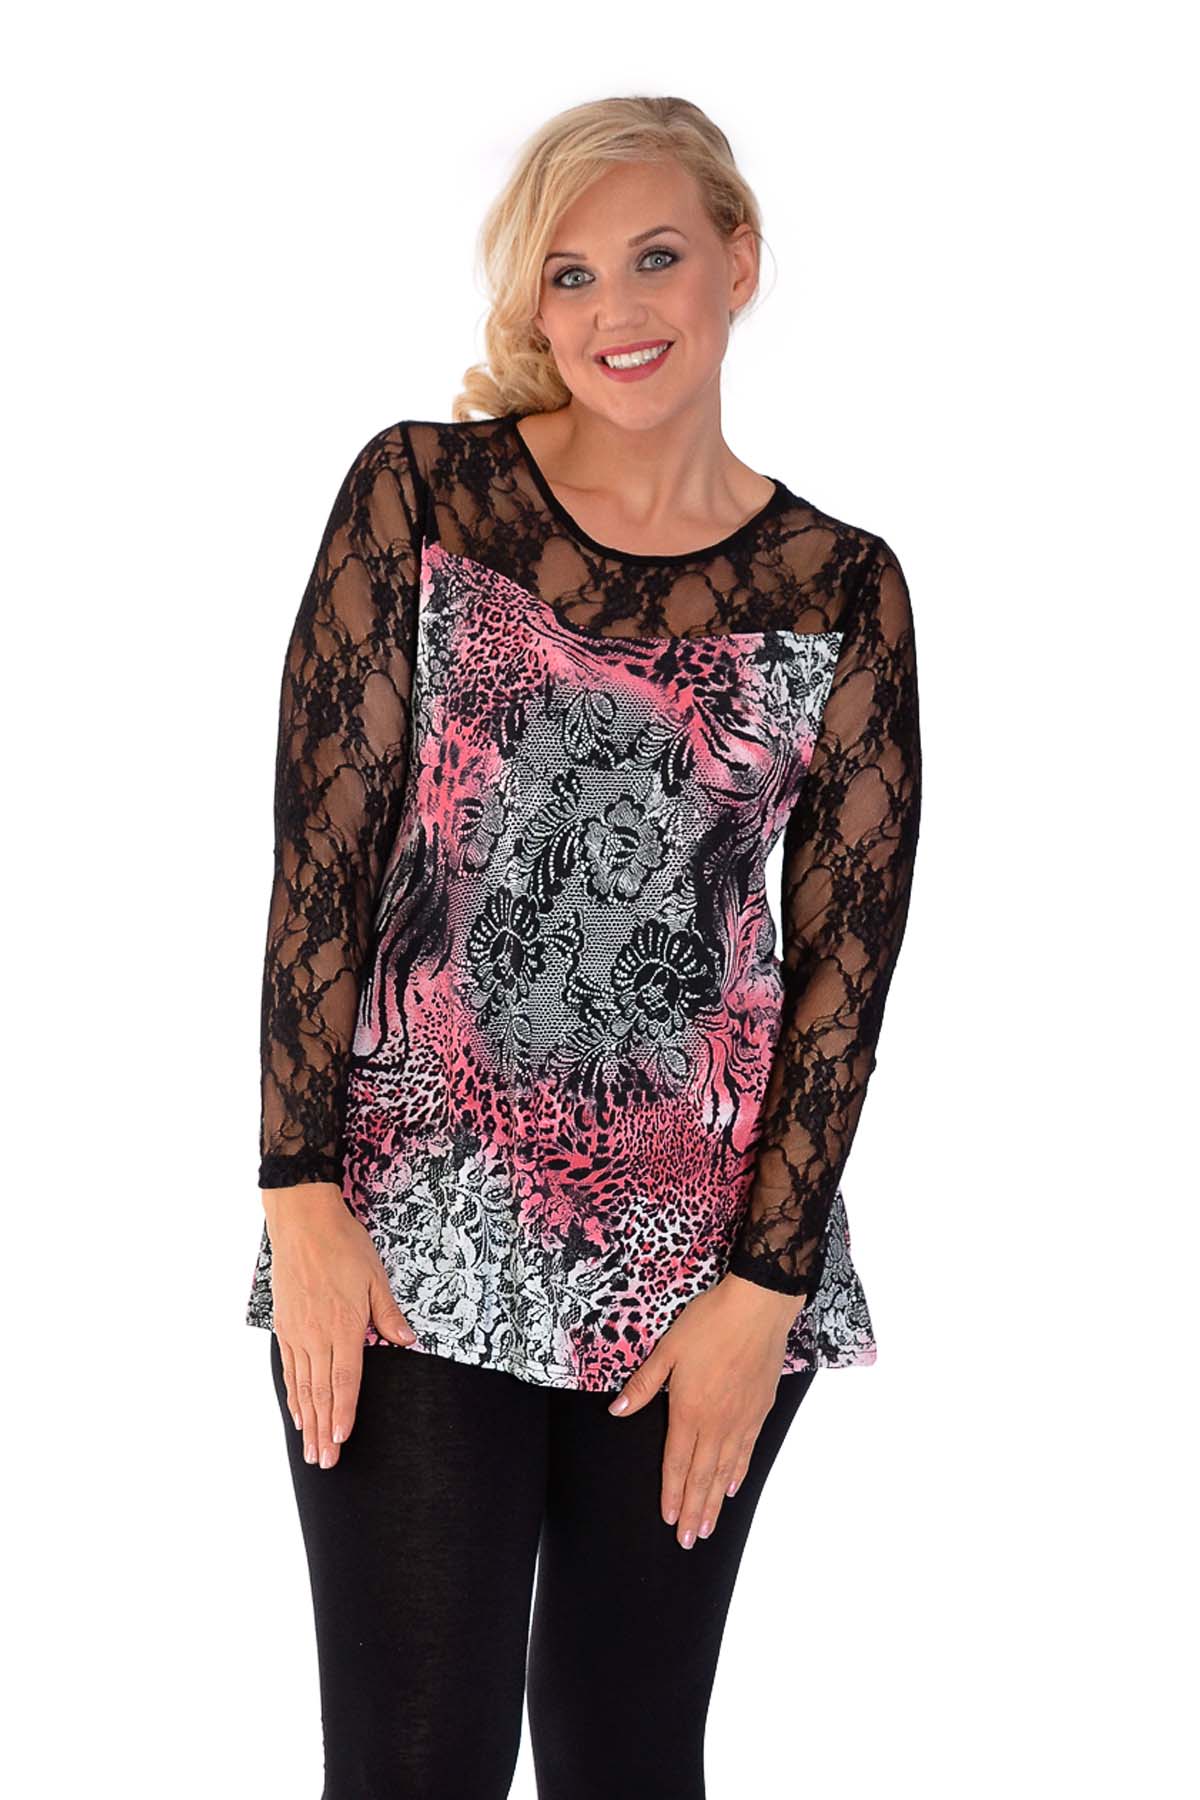 New Ladies Plus Size Top Womens Animal Print Tunic Black Lace Sale ...